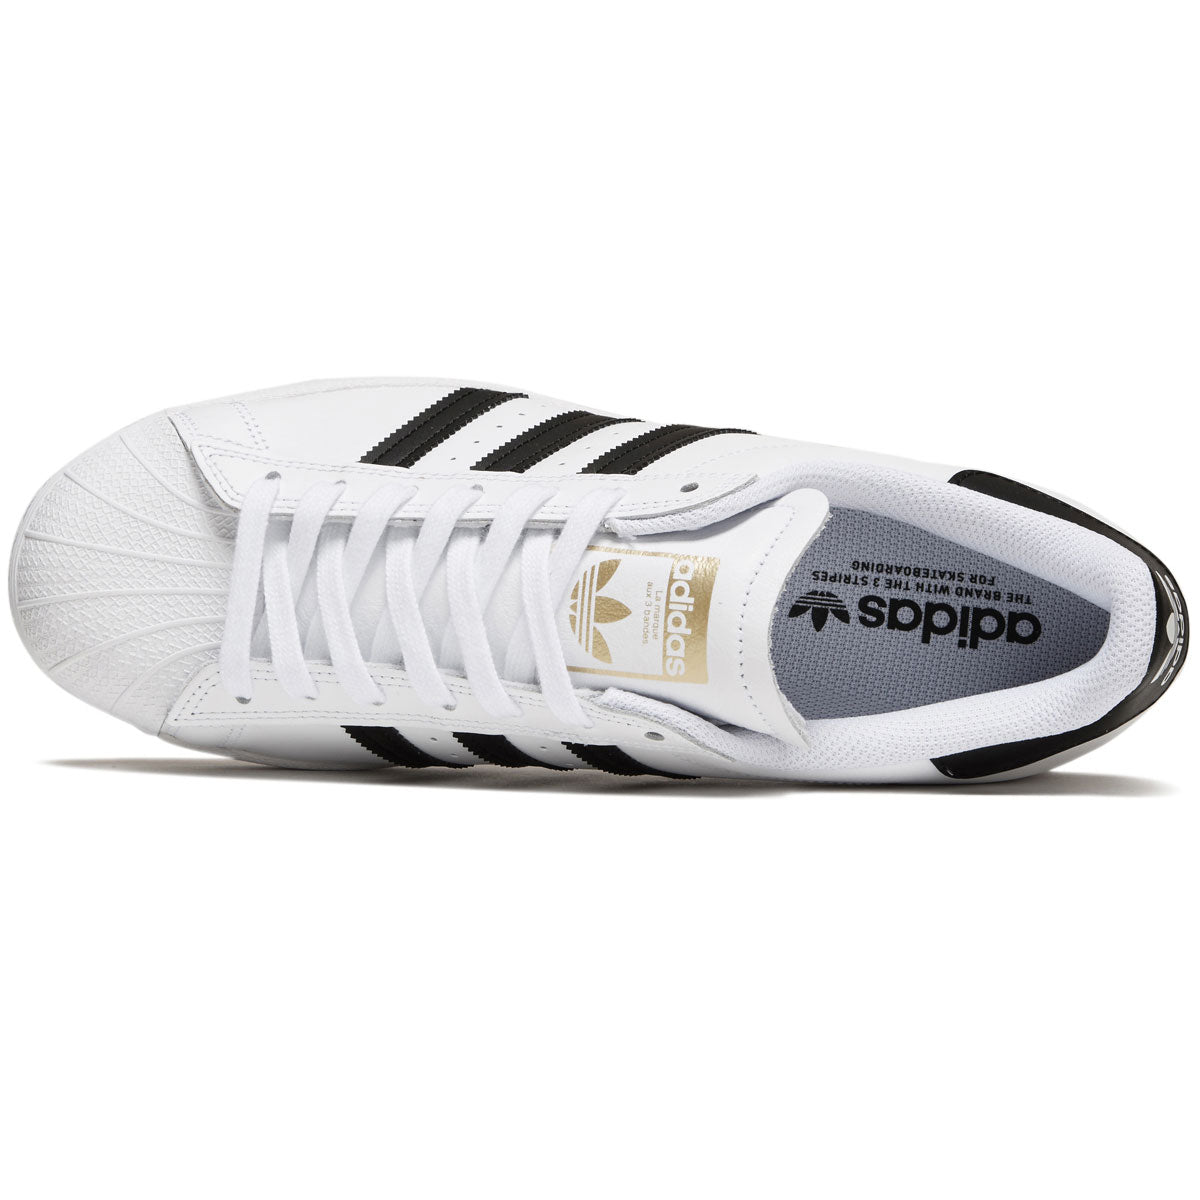 Adidas - Superstar ADV (White/Black) 12